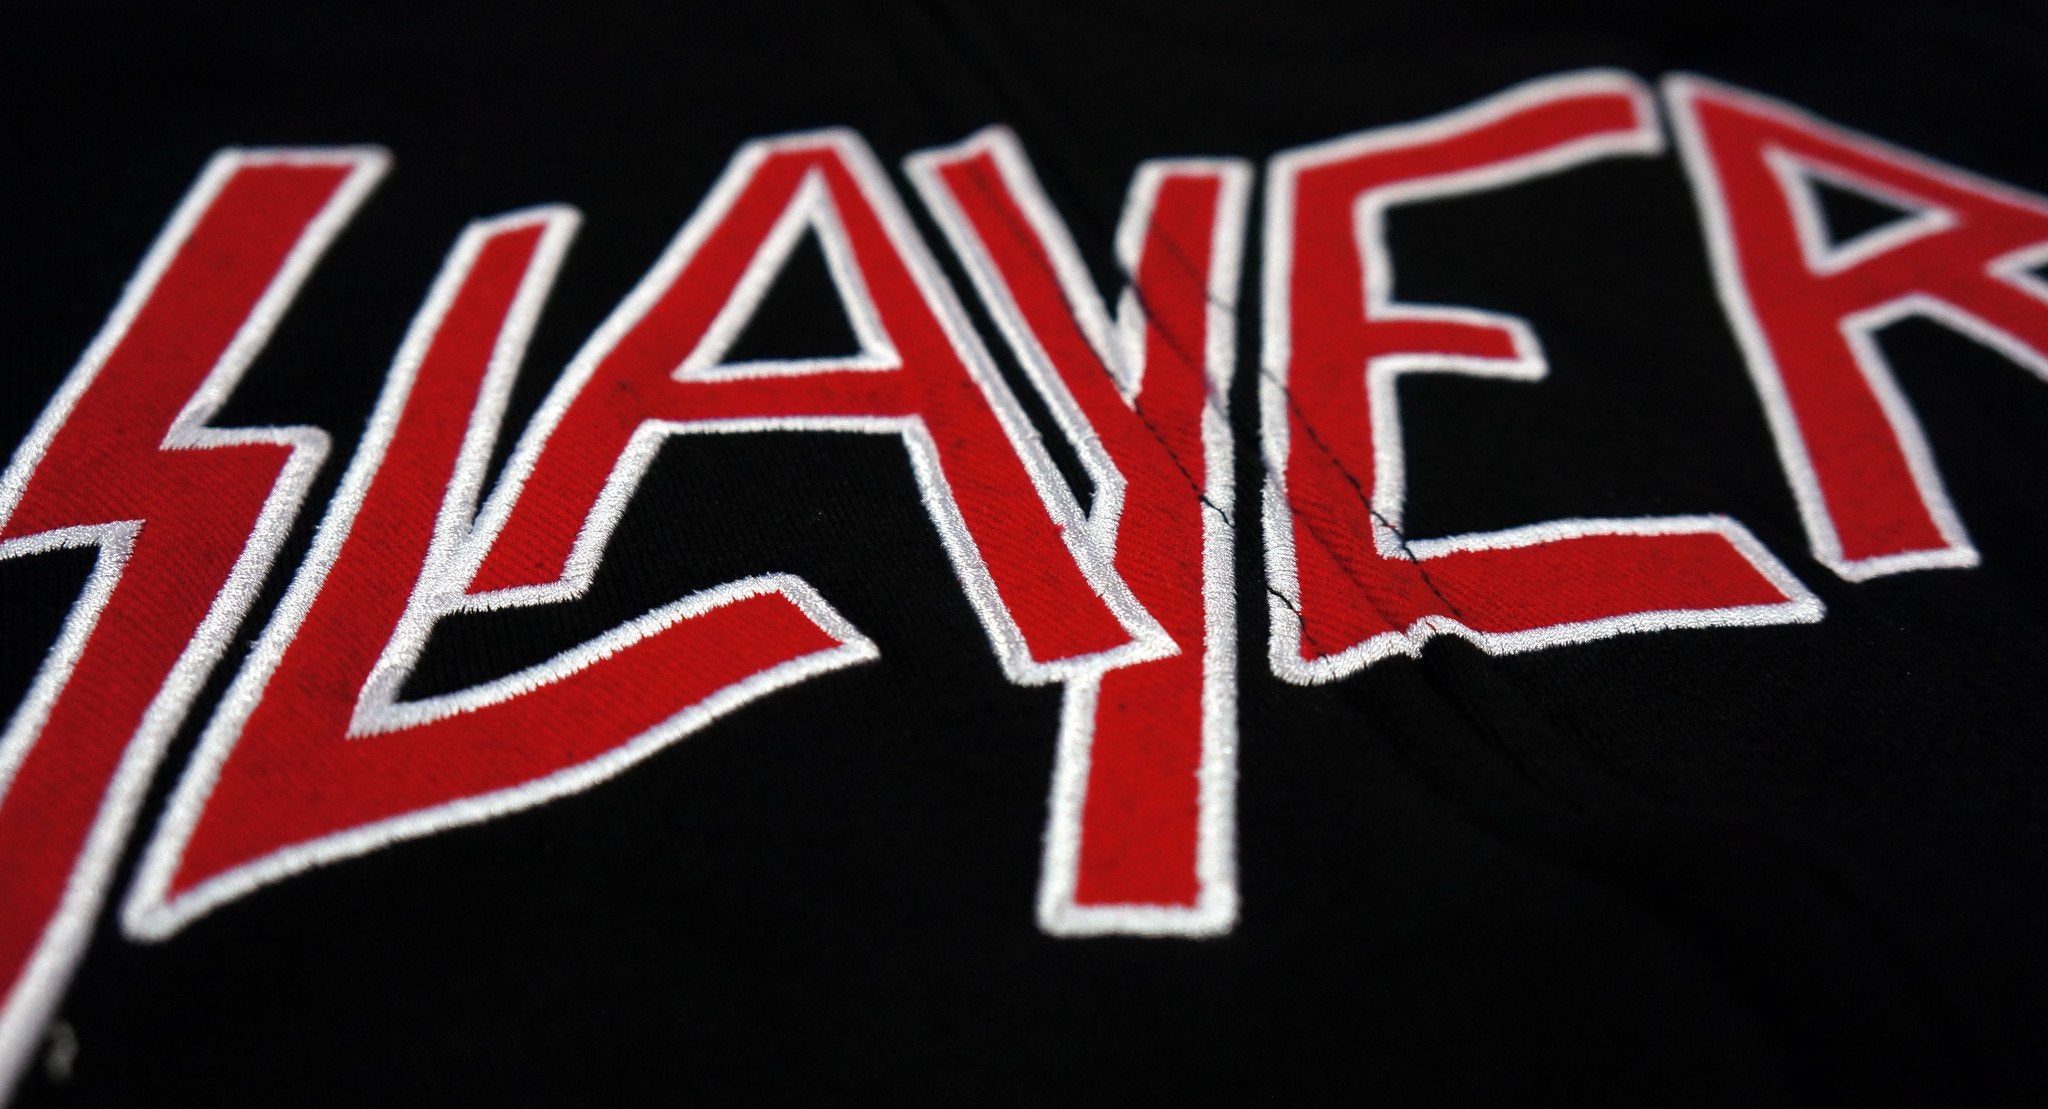 Slayer - Reign In Blood (Black)